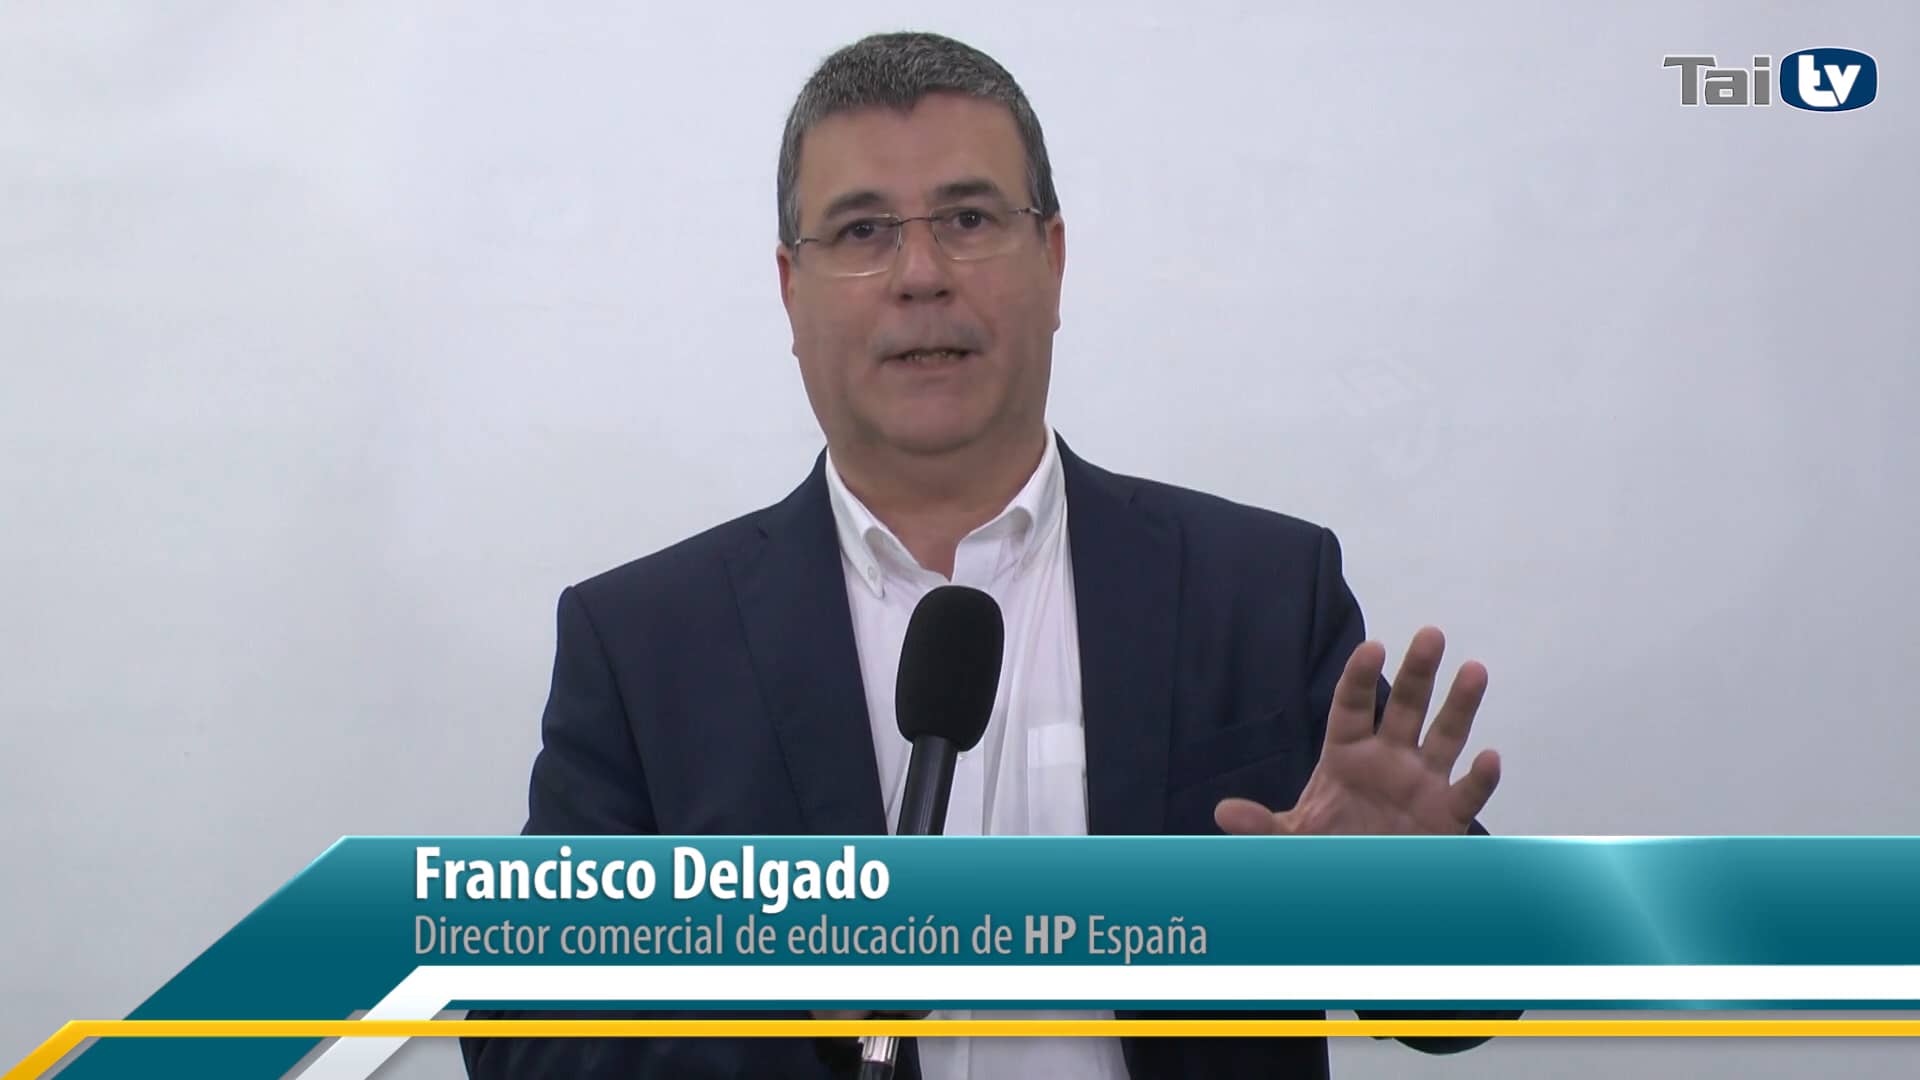 Francisco Delgado, director comercial de educación de HP España ...